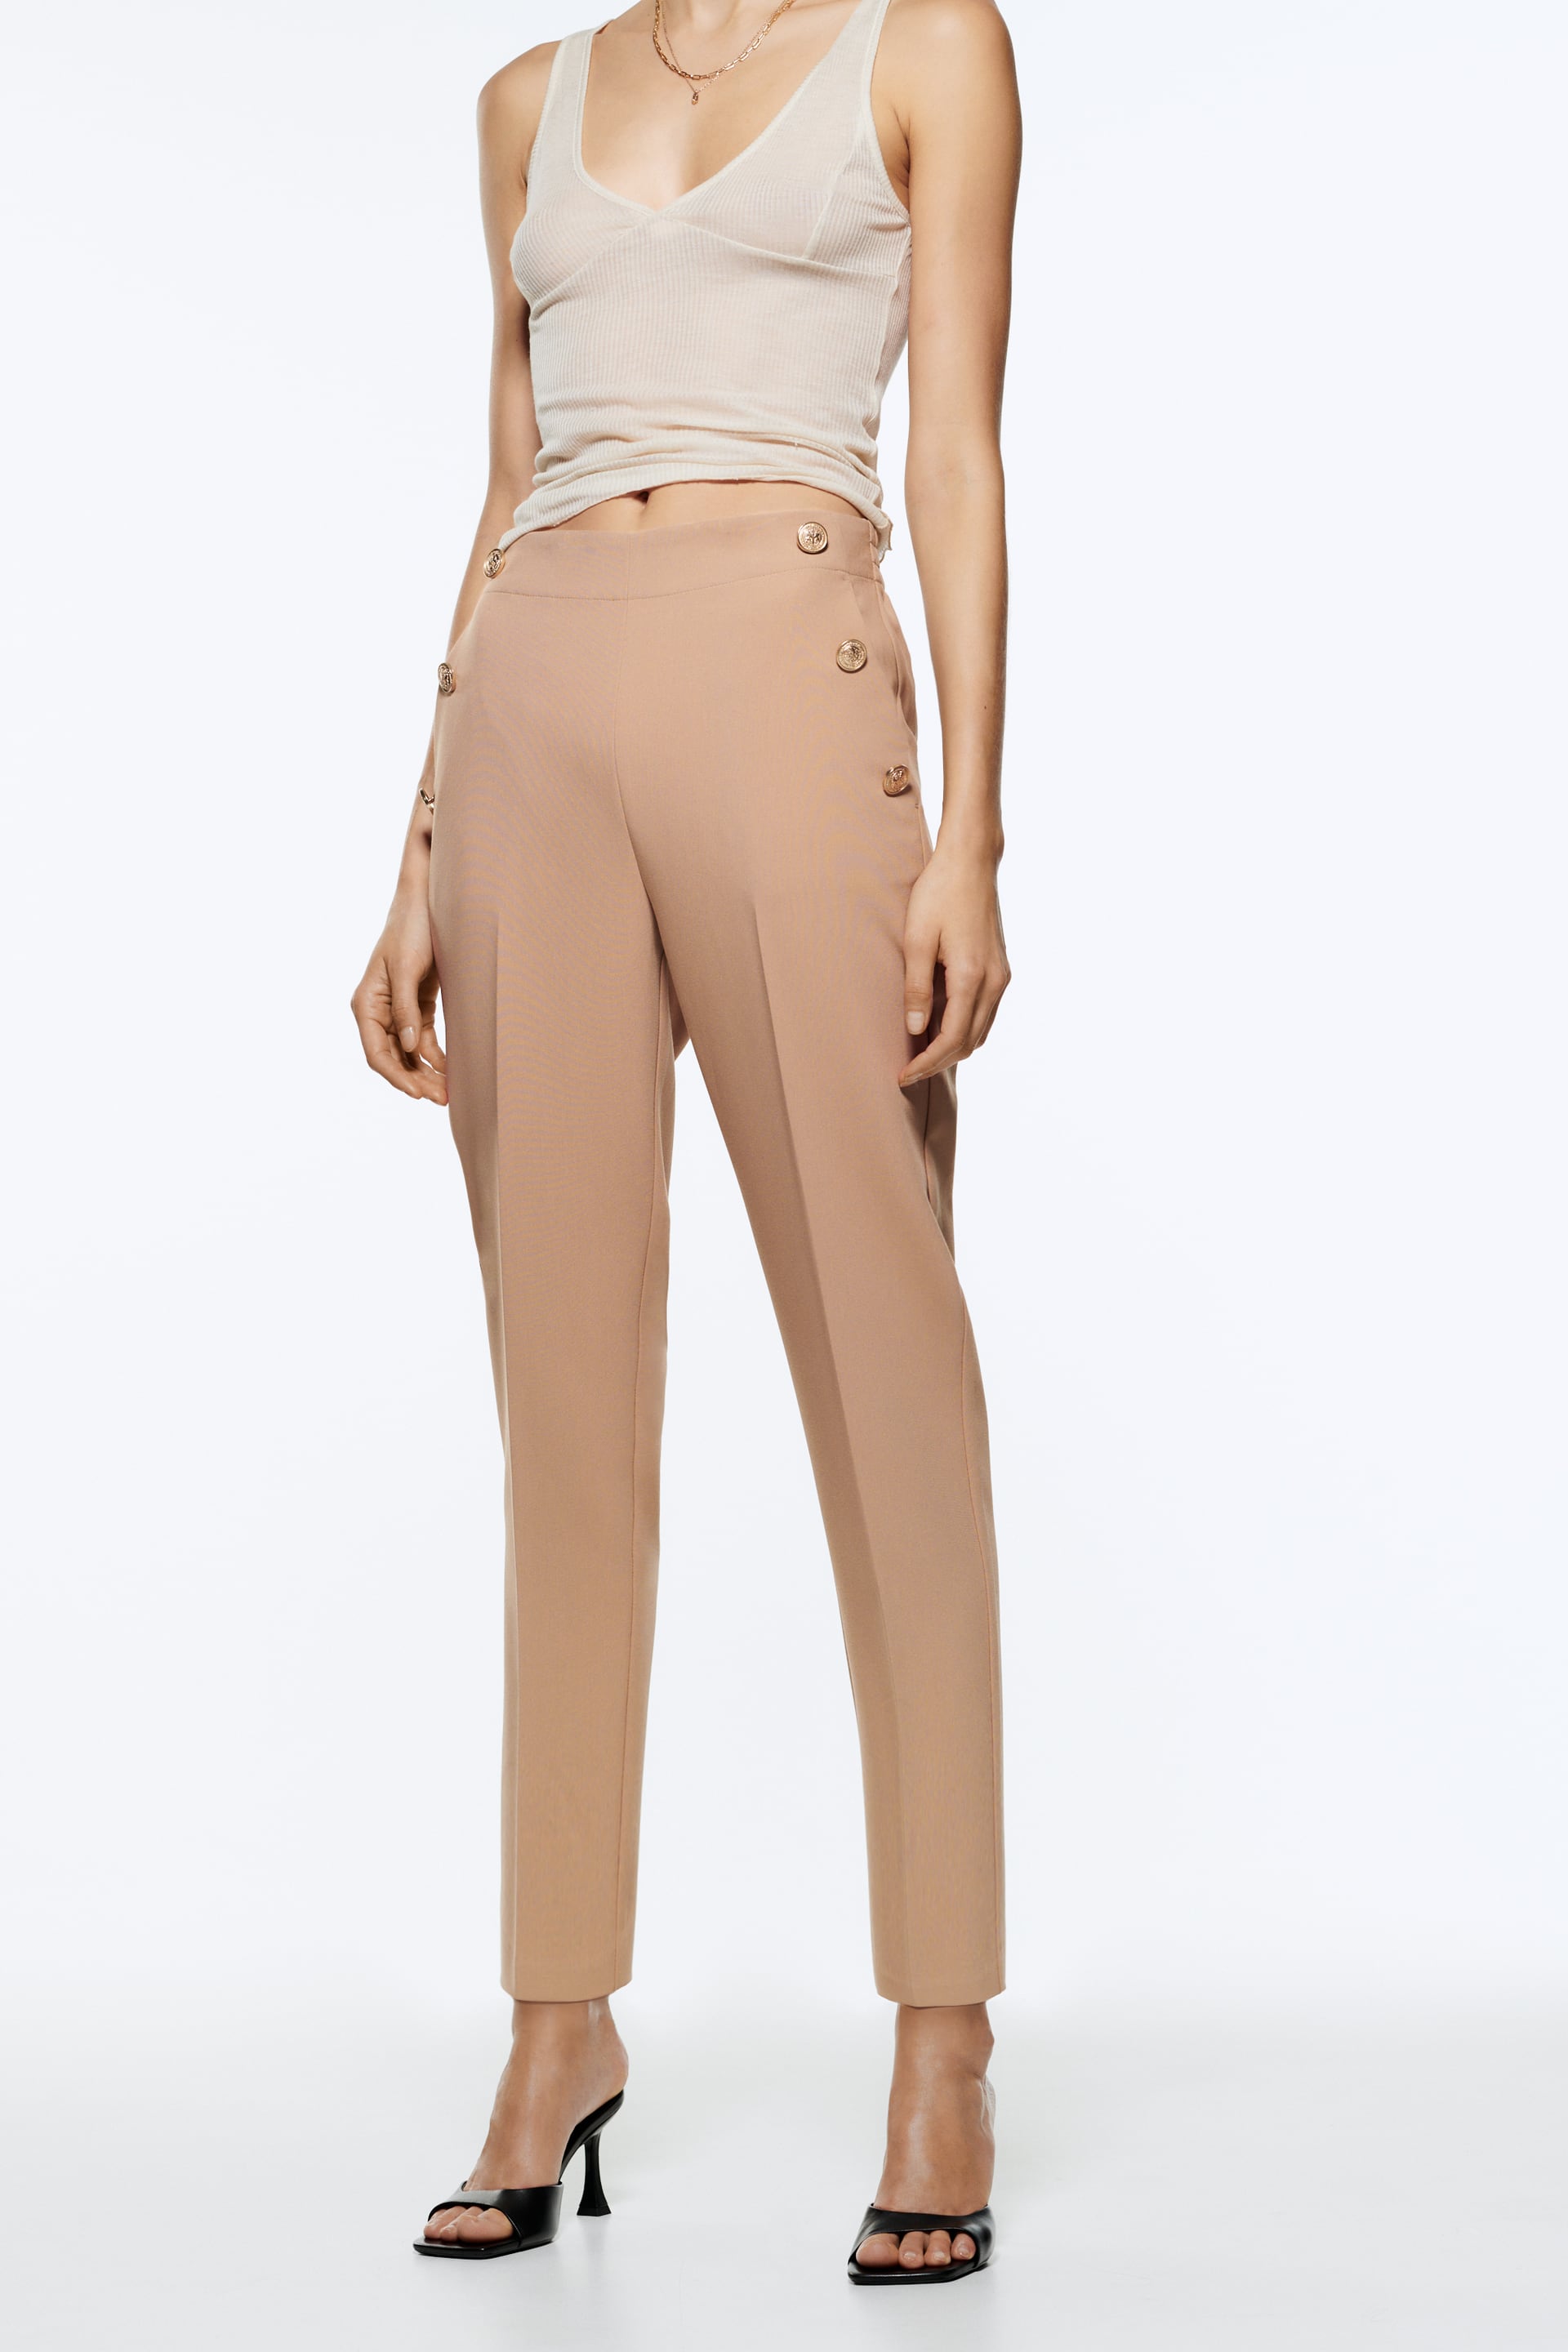 Zara waist detail pants gold button high ecru white blogger favorite